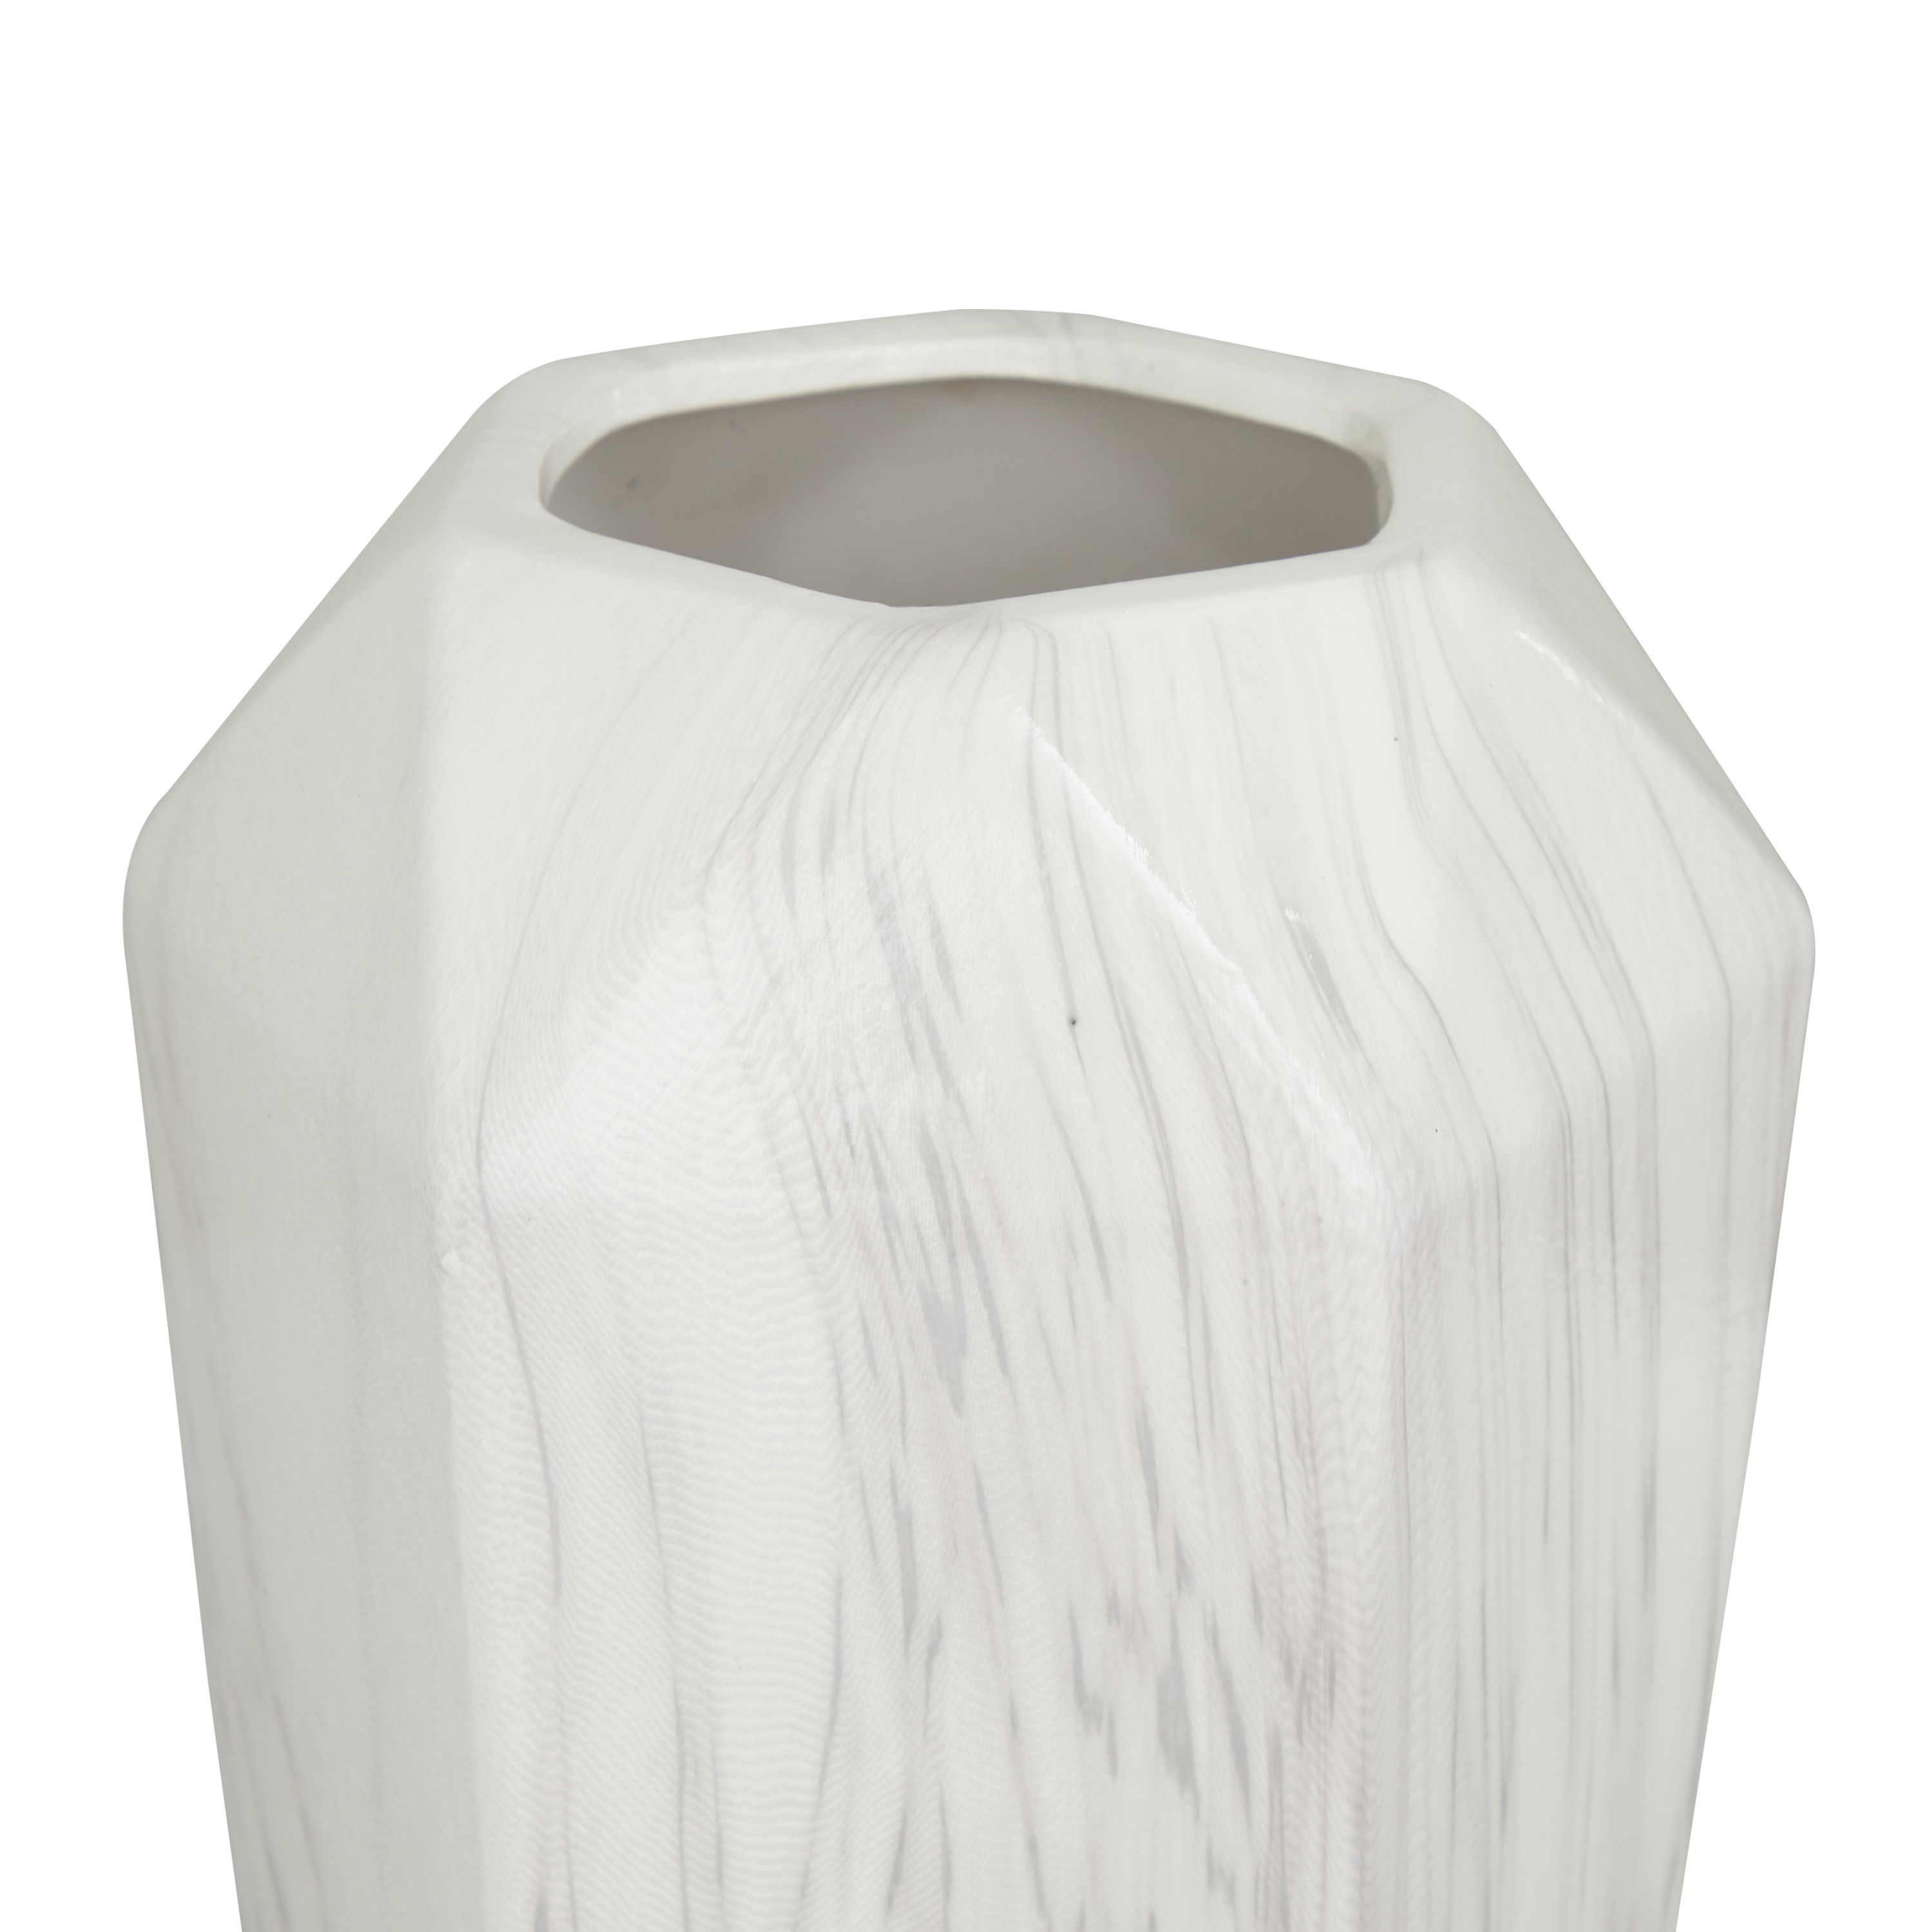 DecMode 14" Faux Marble White Ceramic Vase - image 4 of 9